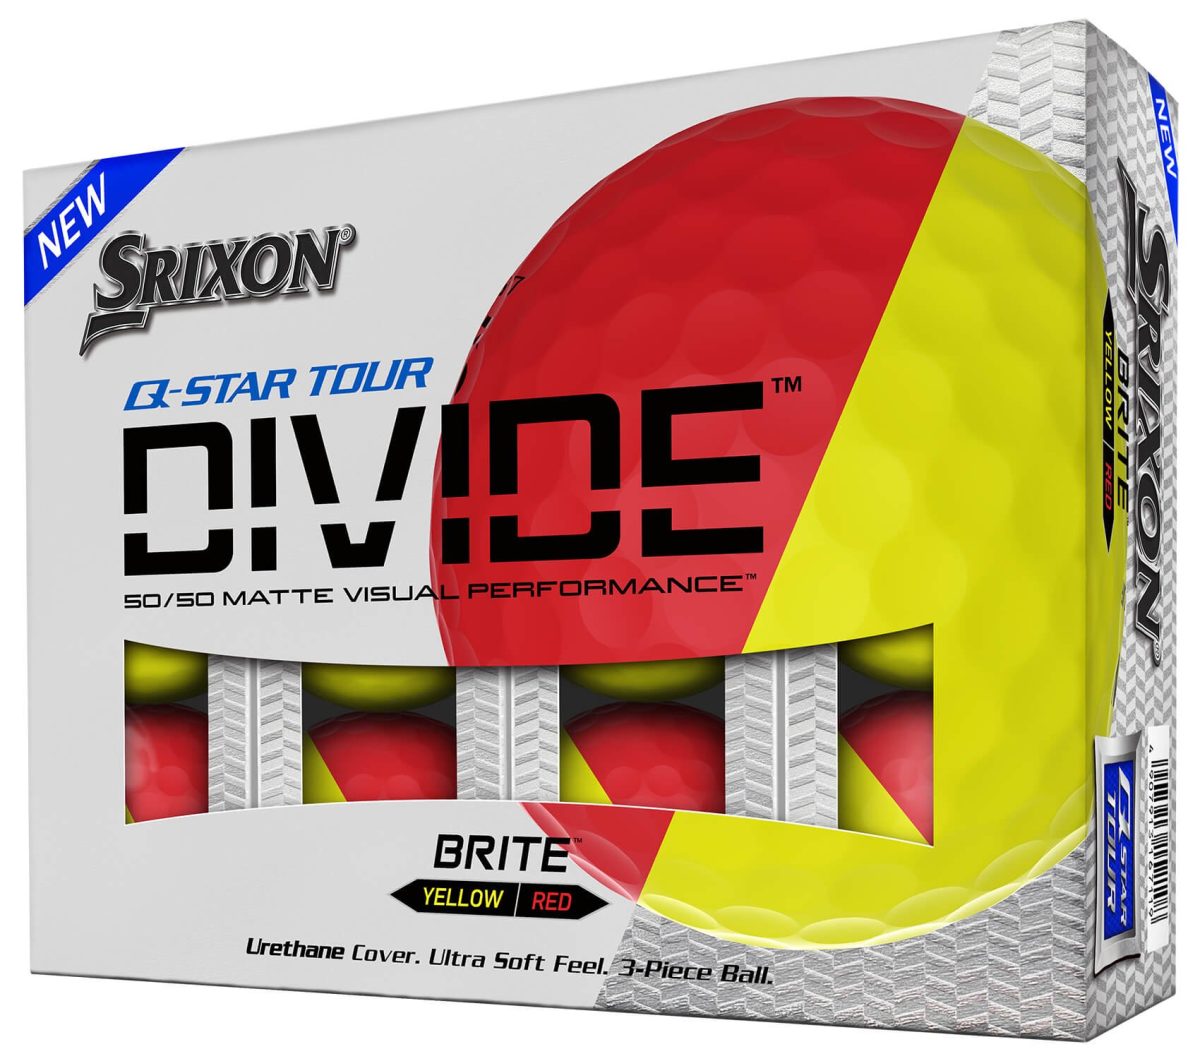 Srixon Men's Q-Star Tour Divide Golf Balls in Yellow/Red